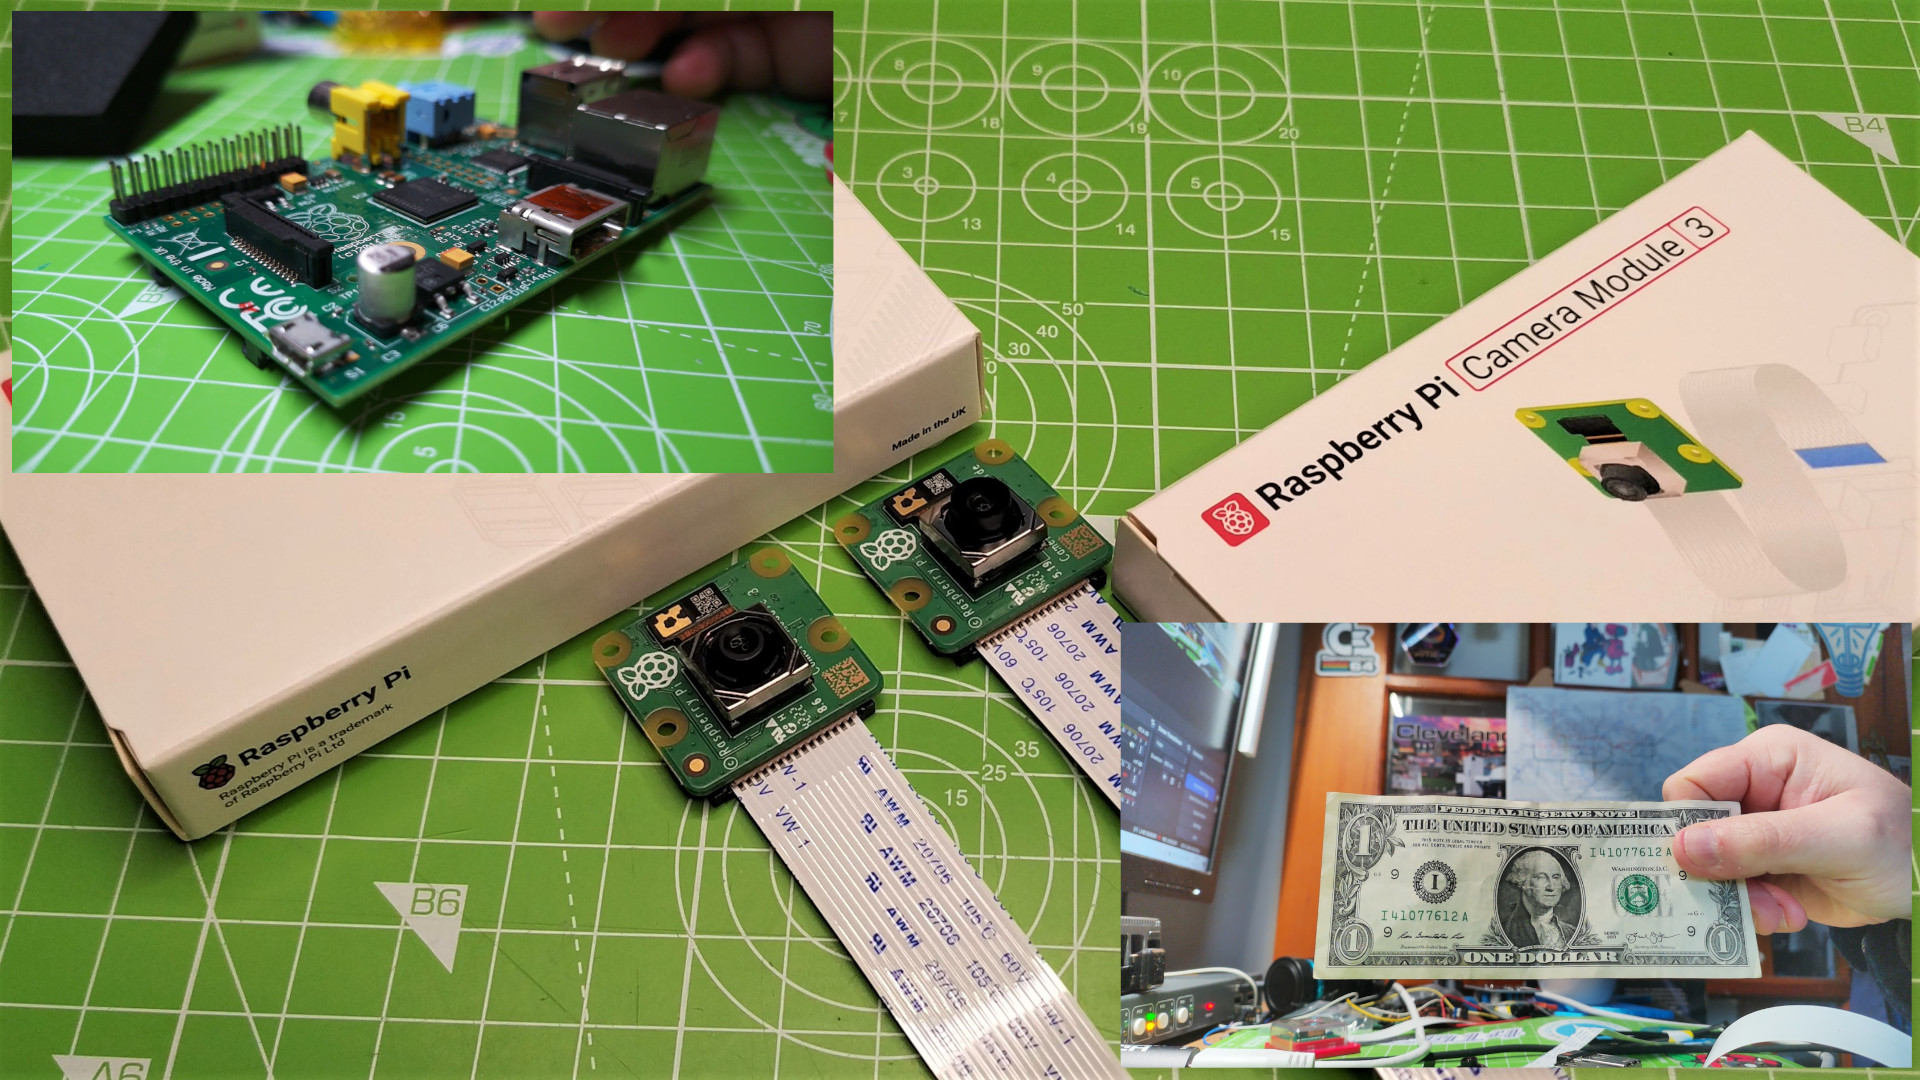 Krijt Verandert in werkzaamheid How To Use Raspberry Pi Camera Module 3 with Python Code | Tom's Hardware